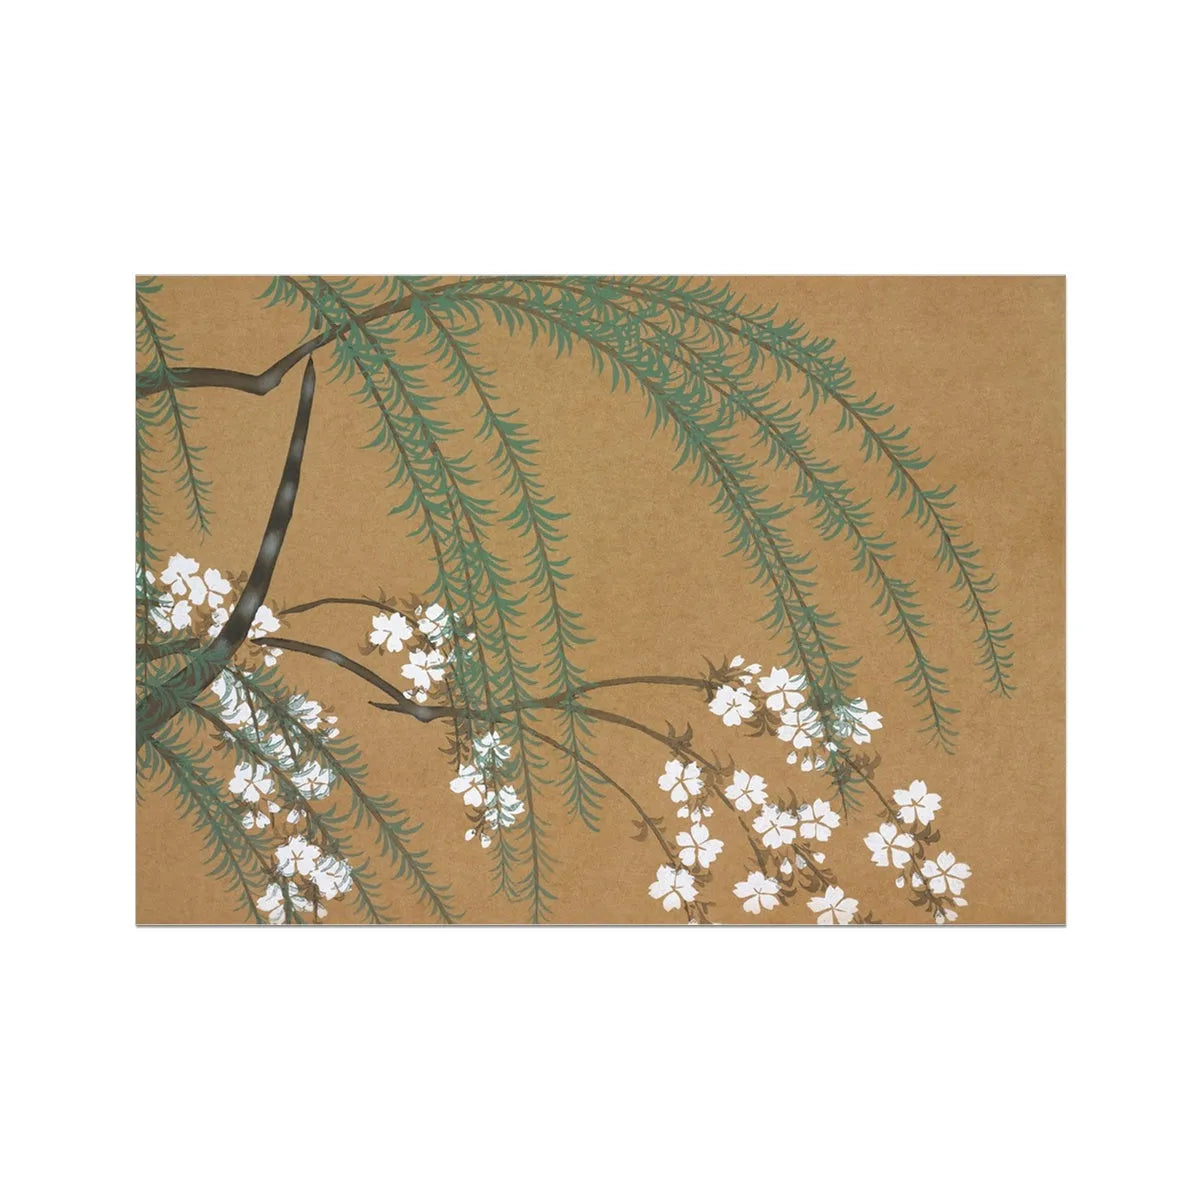 Blossoms From Momoyogusa By Kamisaka Sekka Fine Art Print - Posters Prints & Visual Artwork - Aesthetic Art